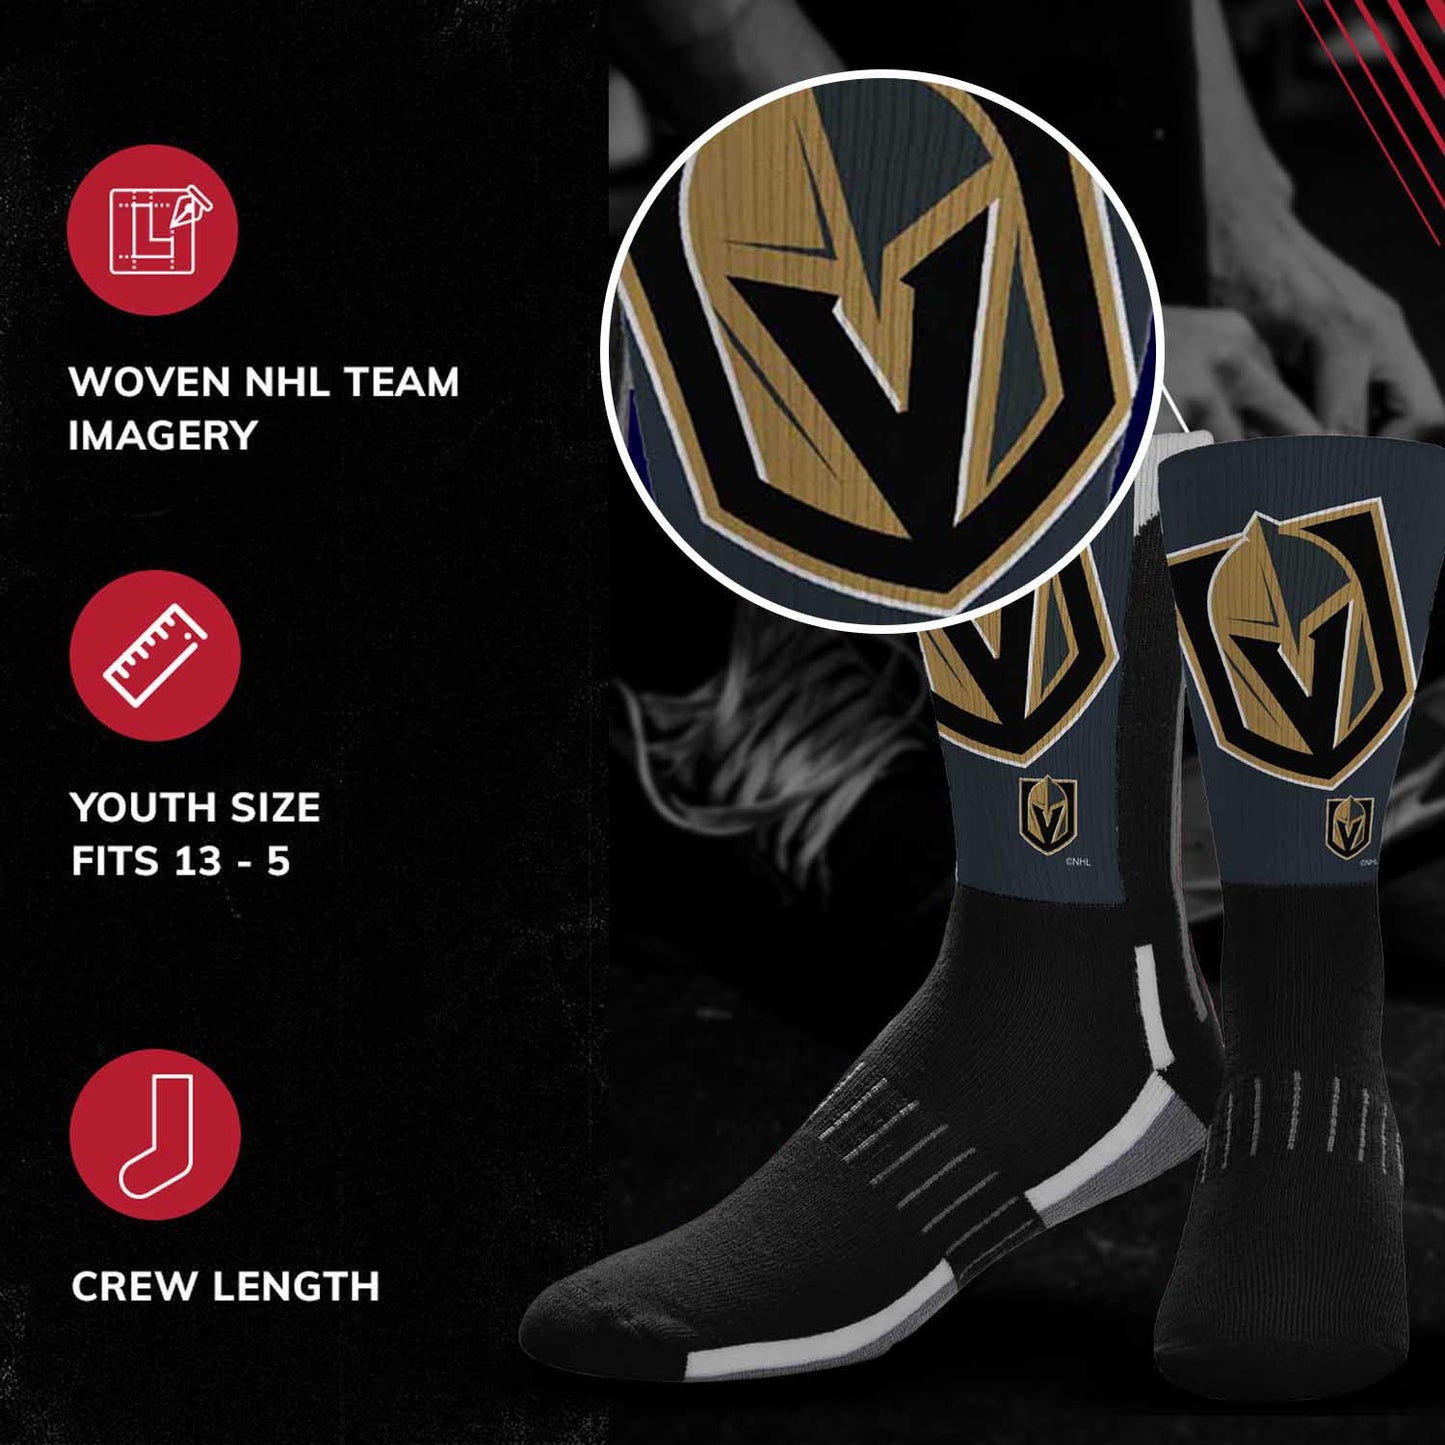 Las Vegas Golden Knights Adult NHL Zoom Curve Team Crew Socks - Black